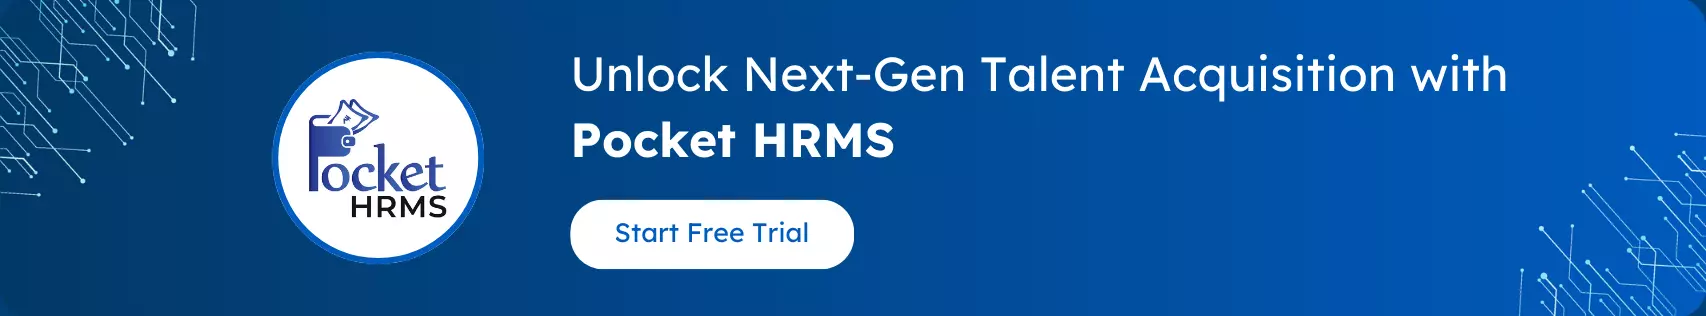 Unlock Next-Gen Talent Acquisition with Pocket HRMS